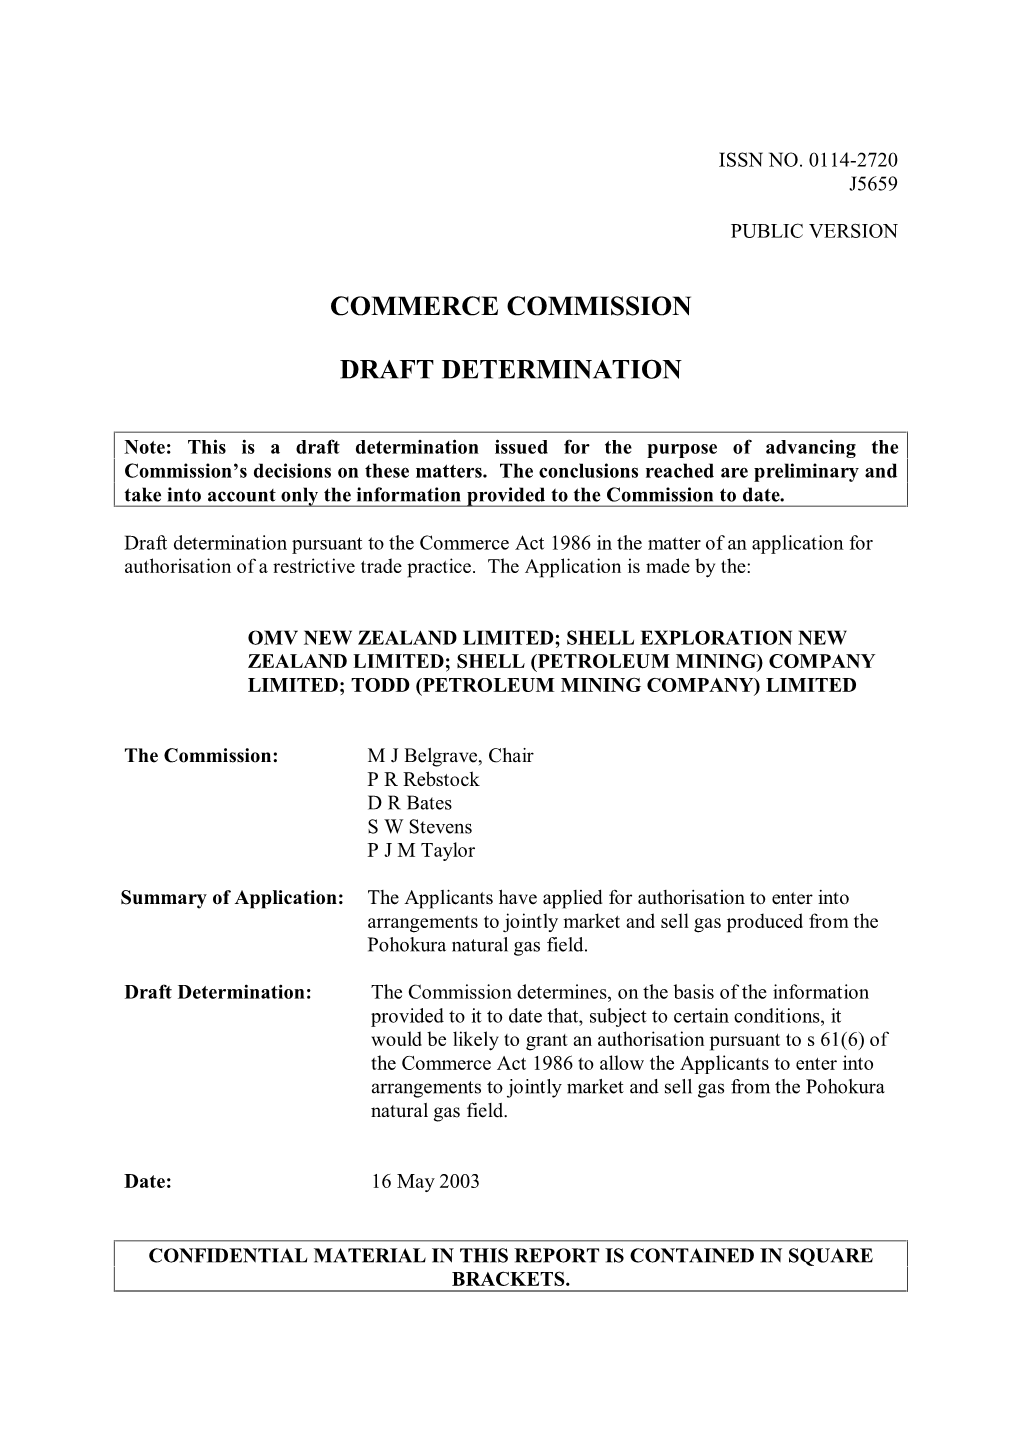 Commerce Commission Draft Determination